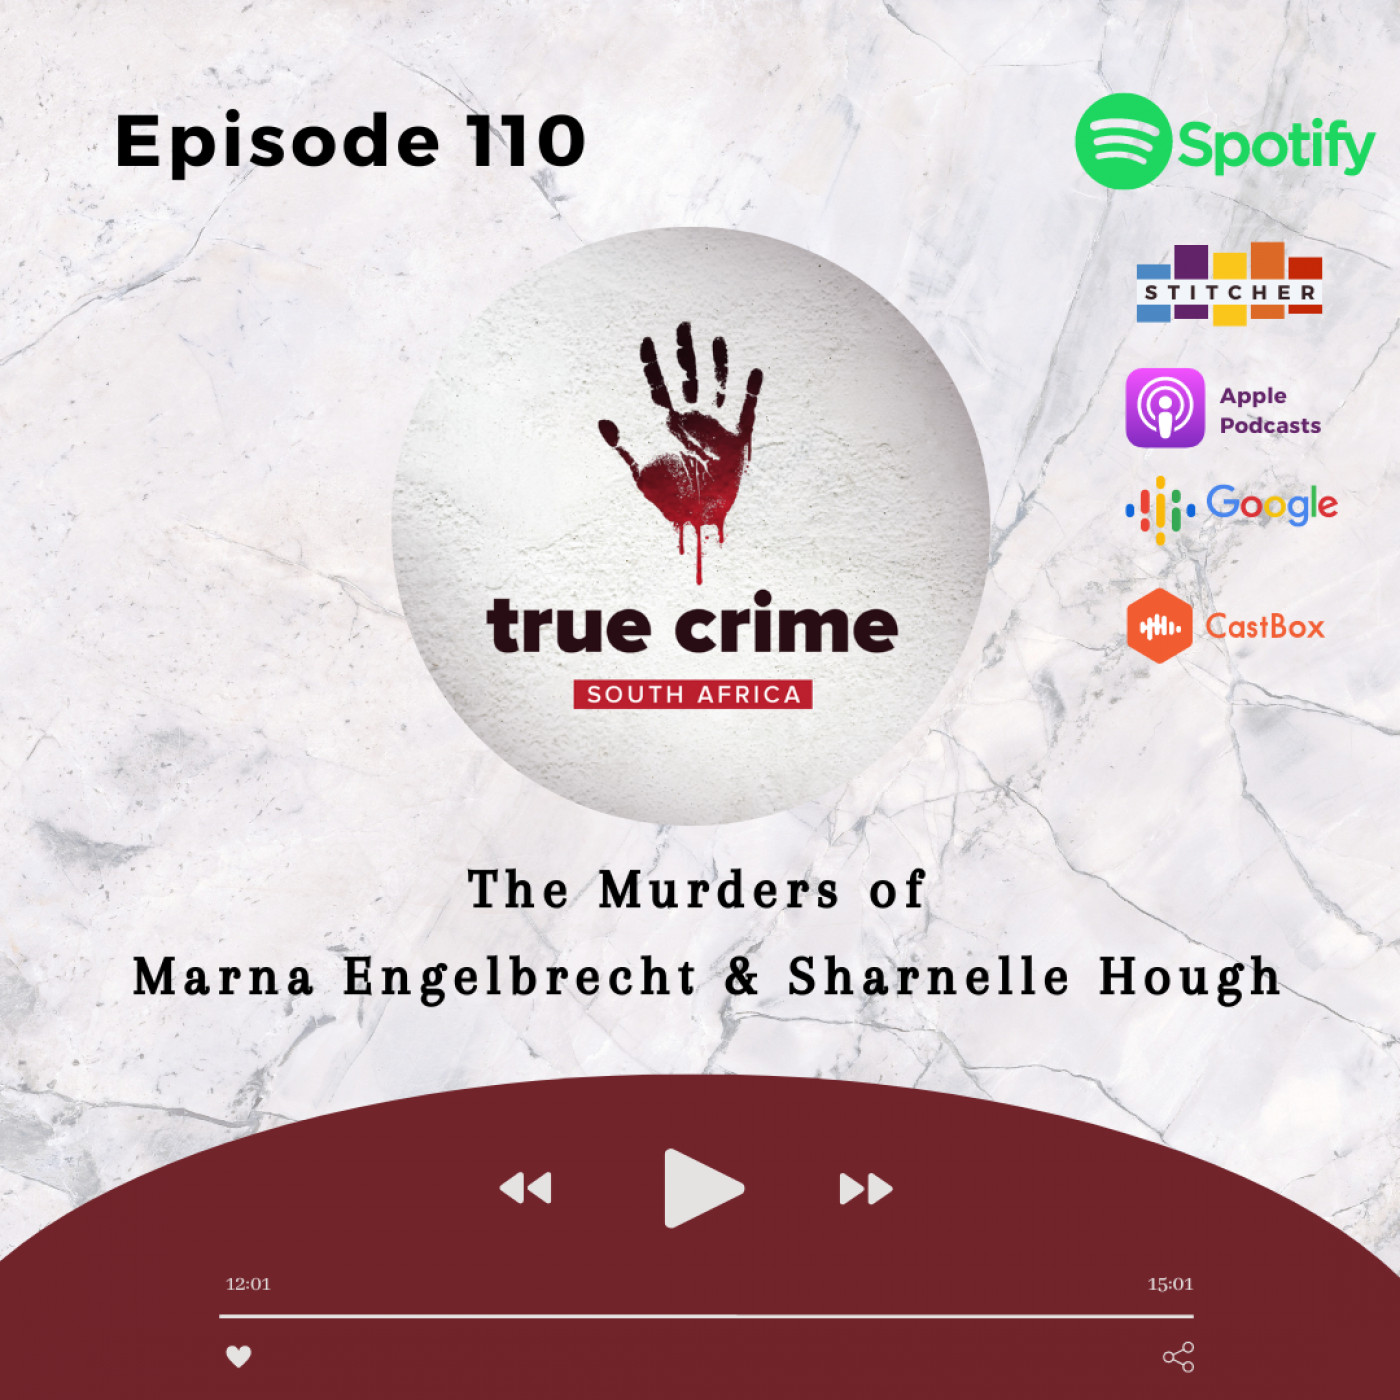 Episode 110 The Murders of Marna Engelbrecht & Sharnelle Hough